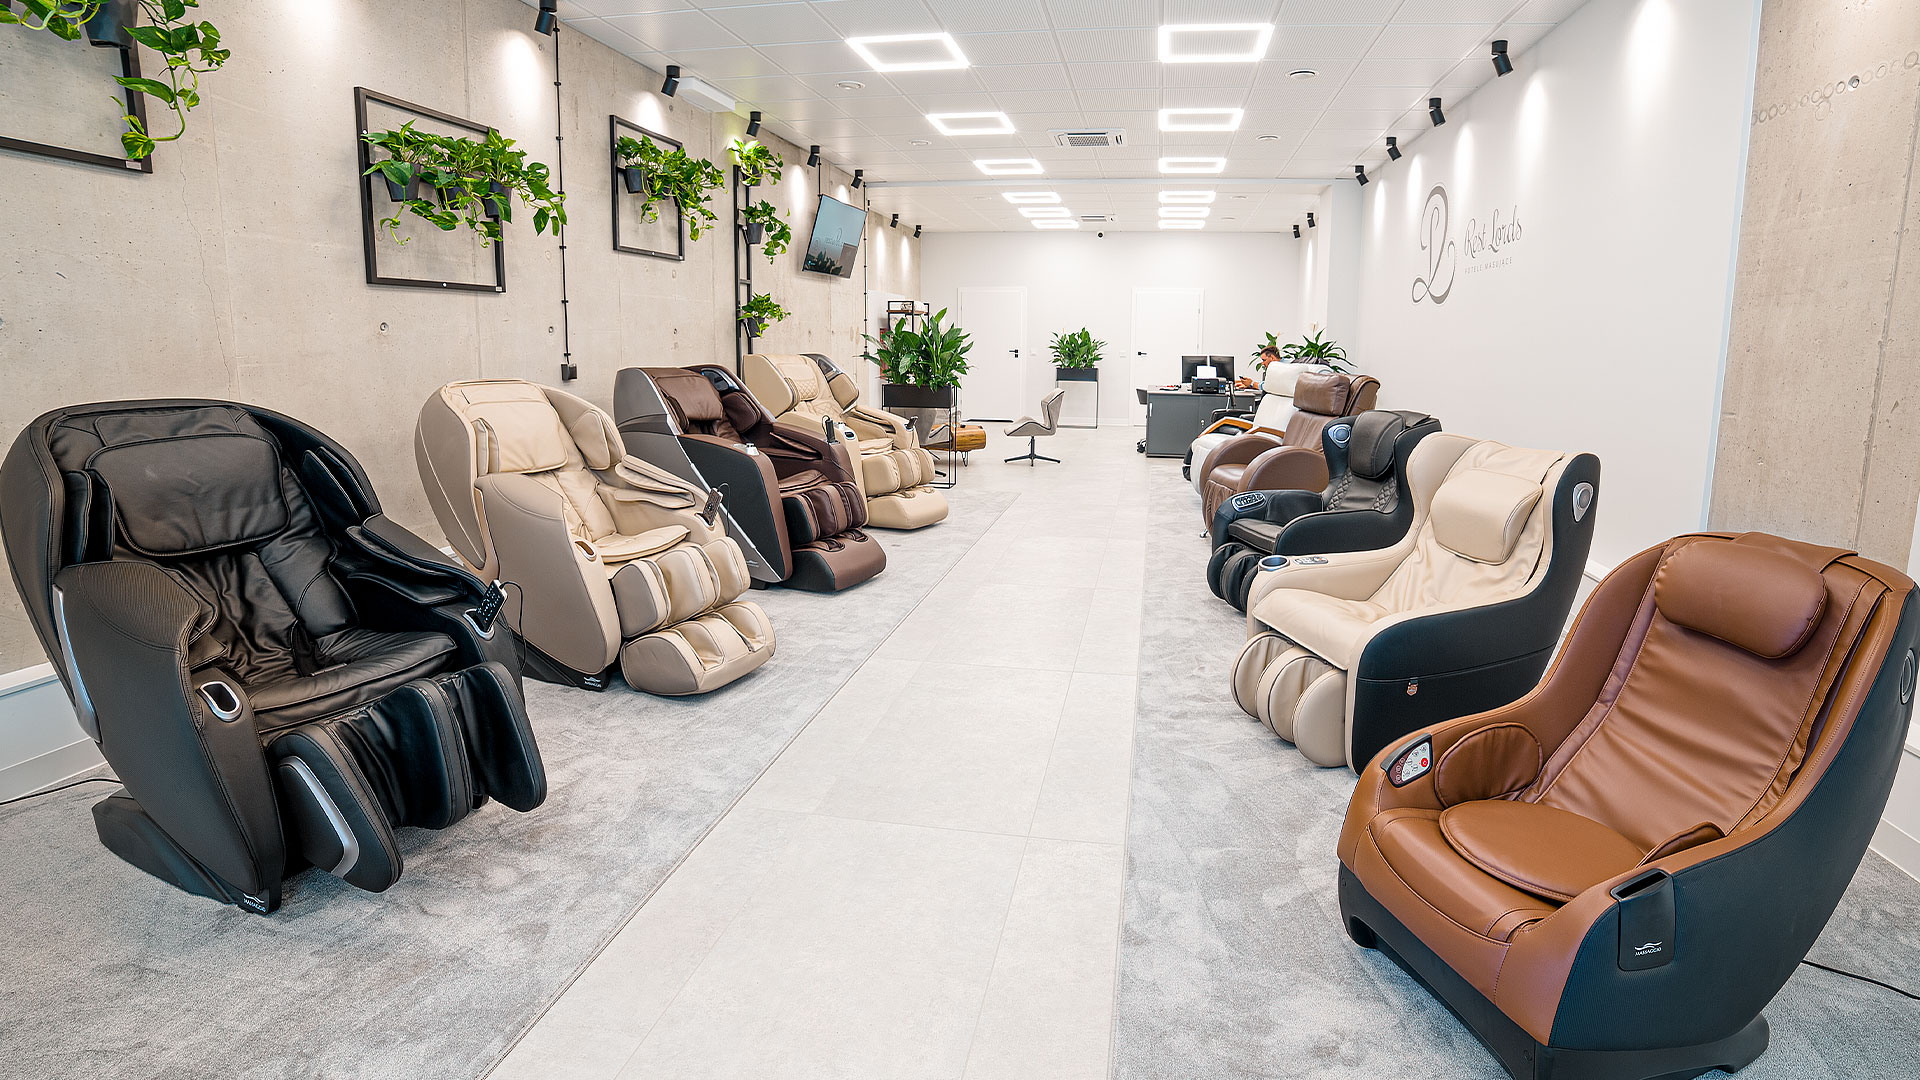 Showroom of a massage chairs in Wrocławiu